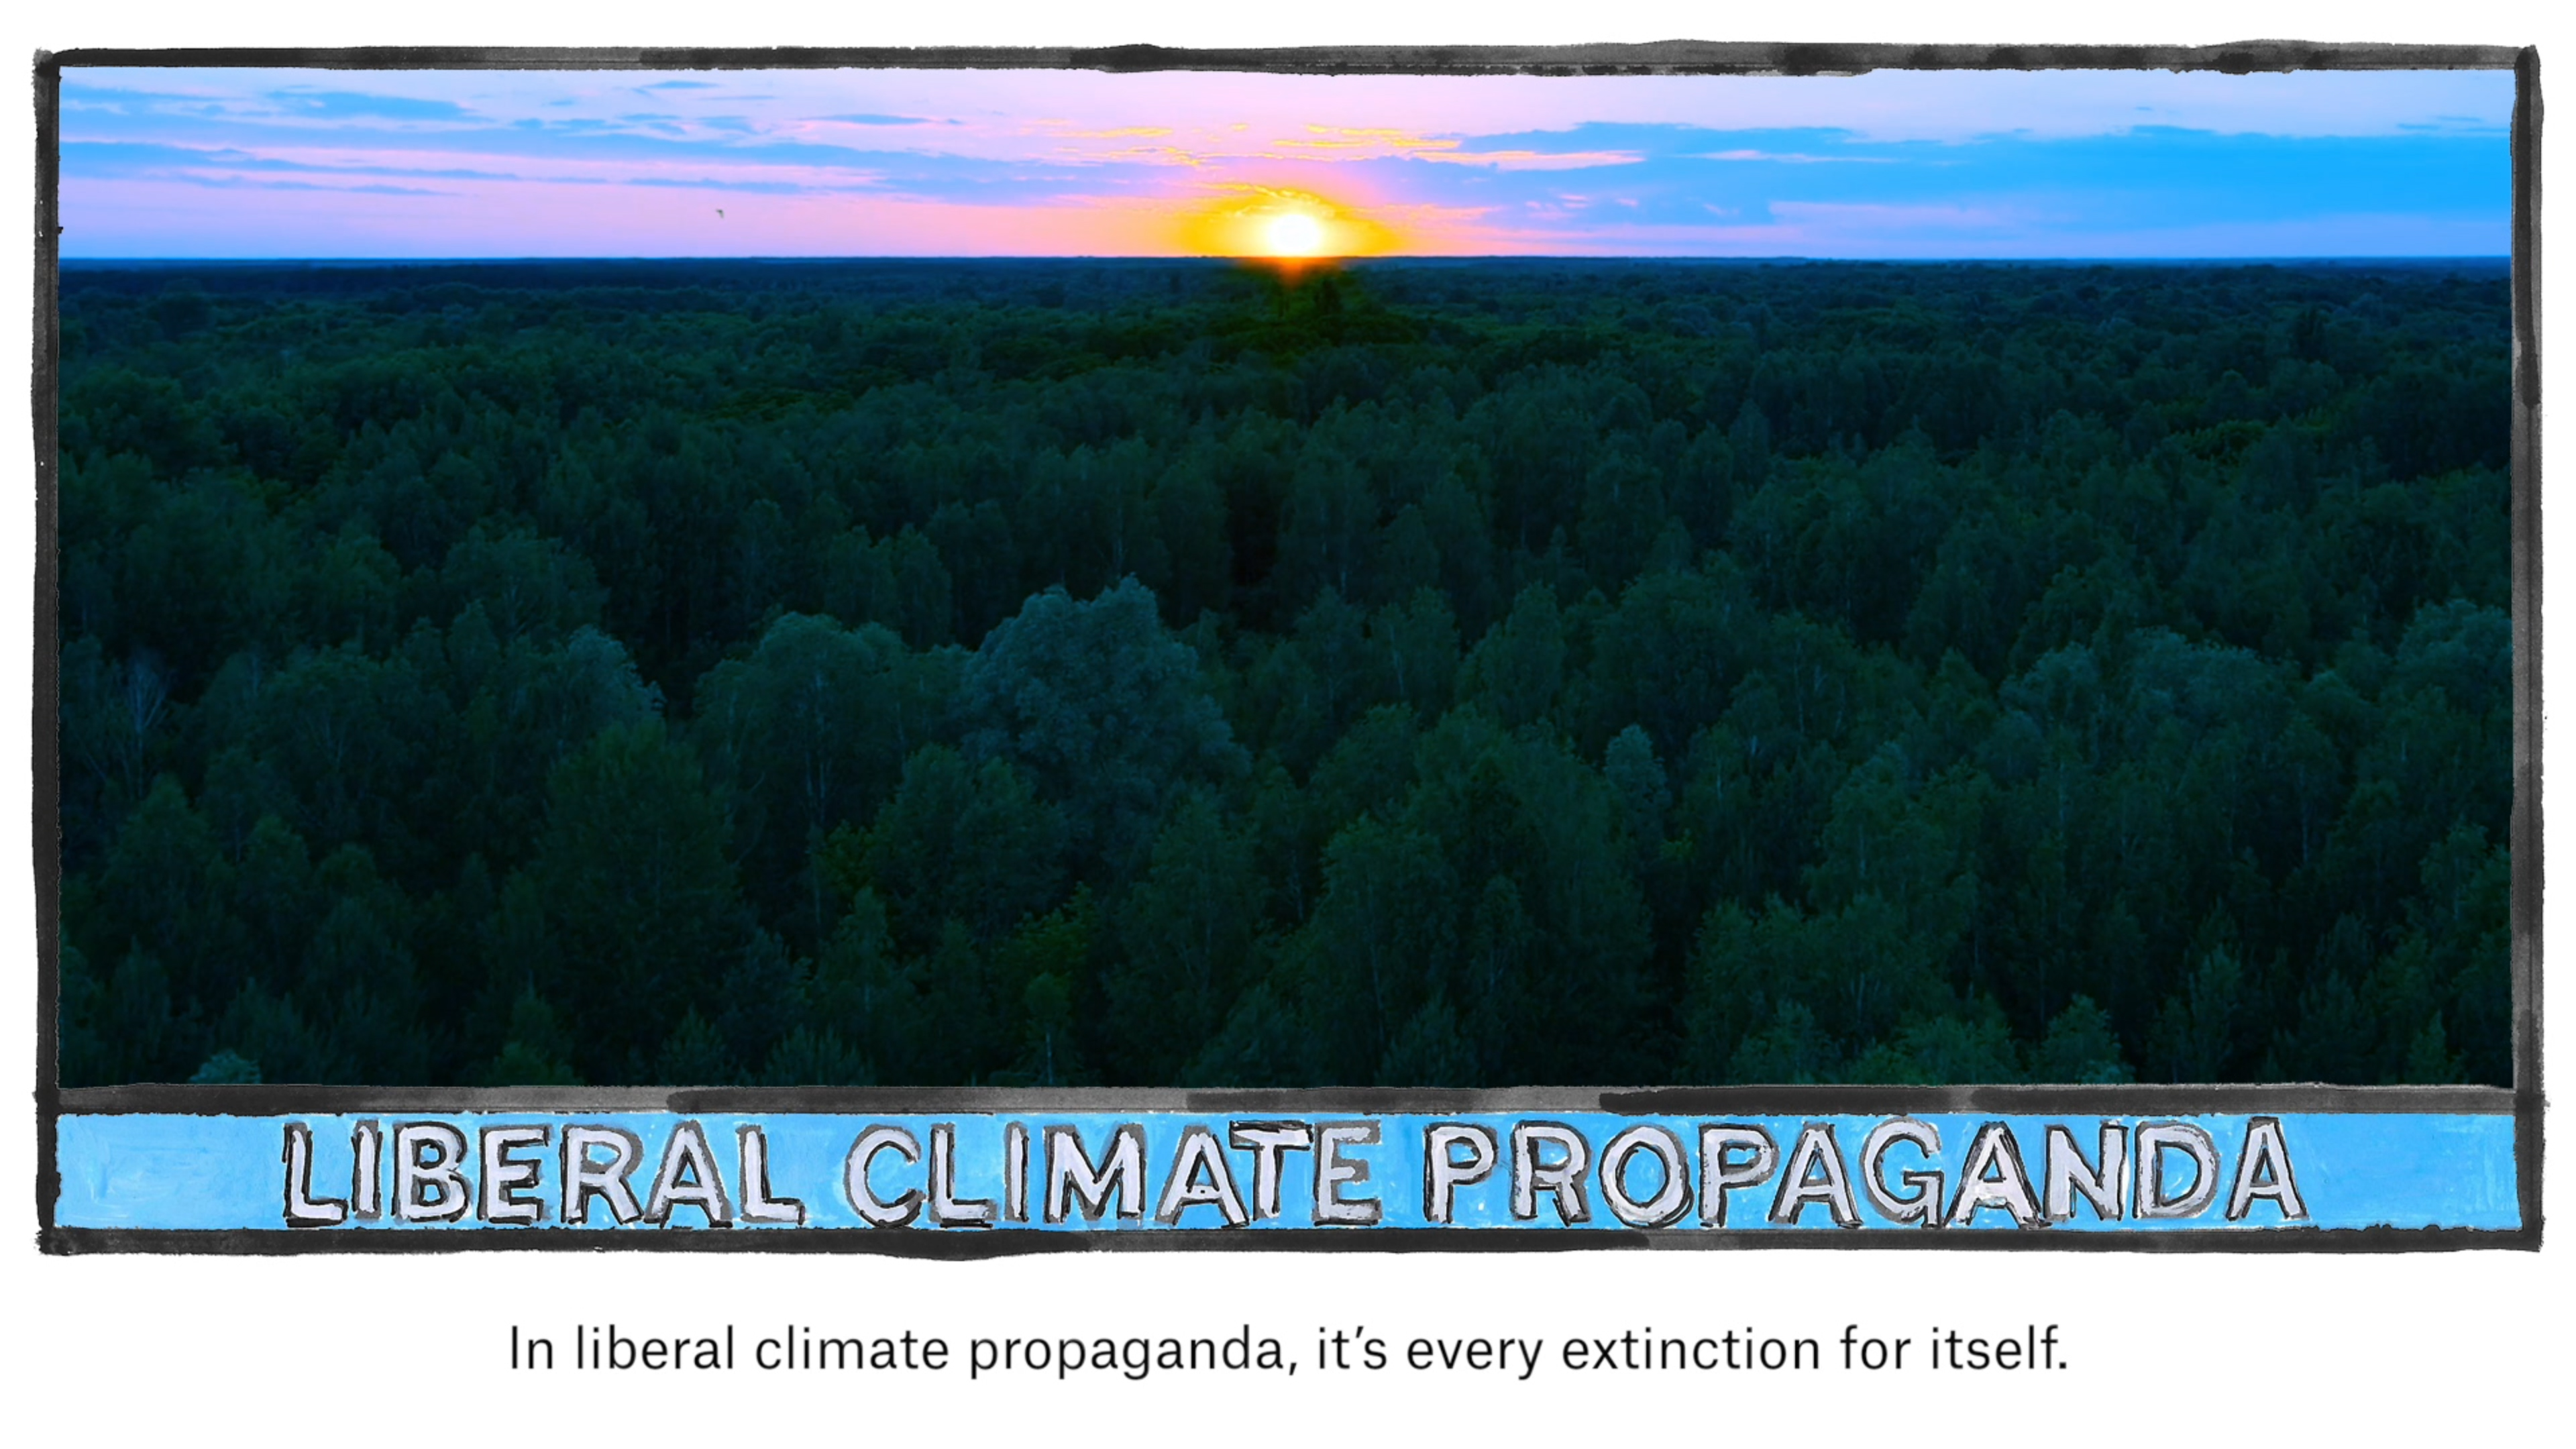 Jonas Staal, Climate Propagandas, Video Study